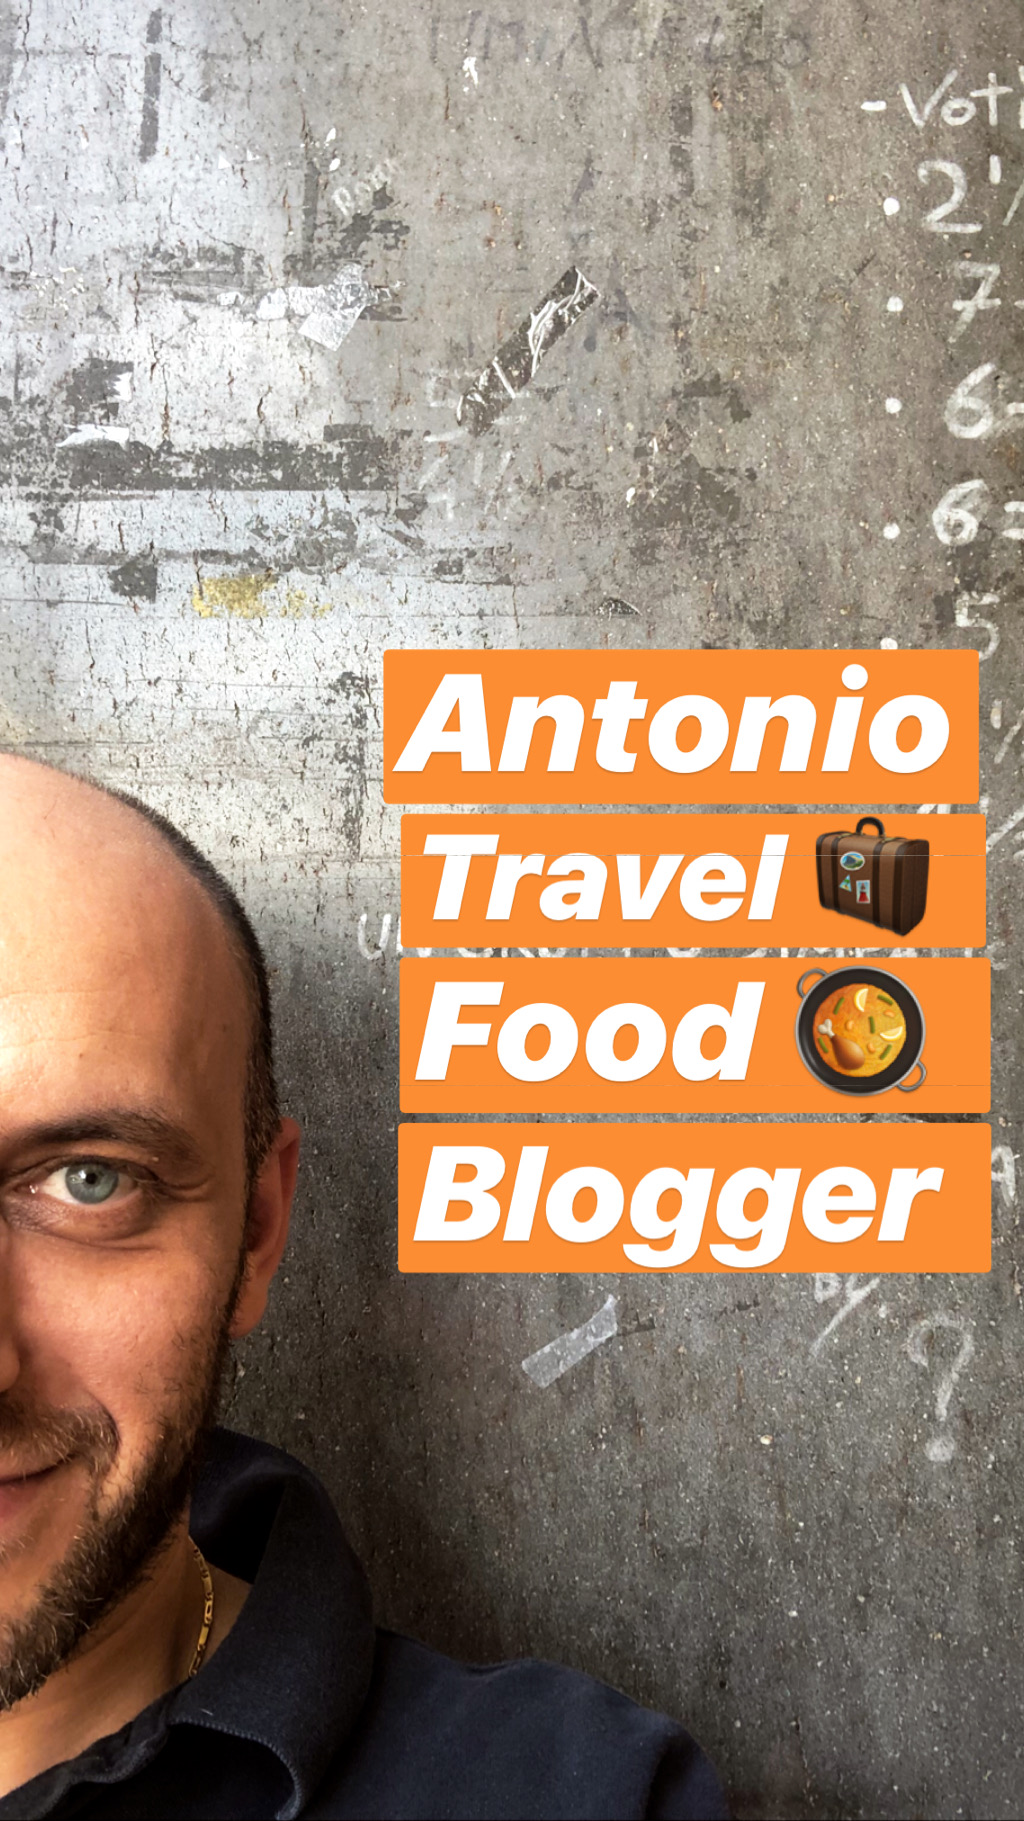 Antonio Travel Food Blogger